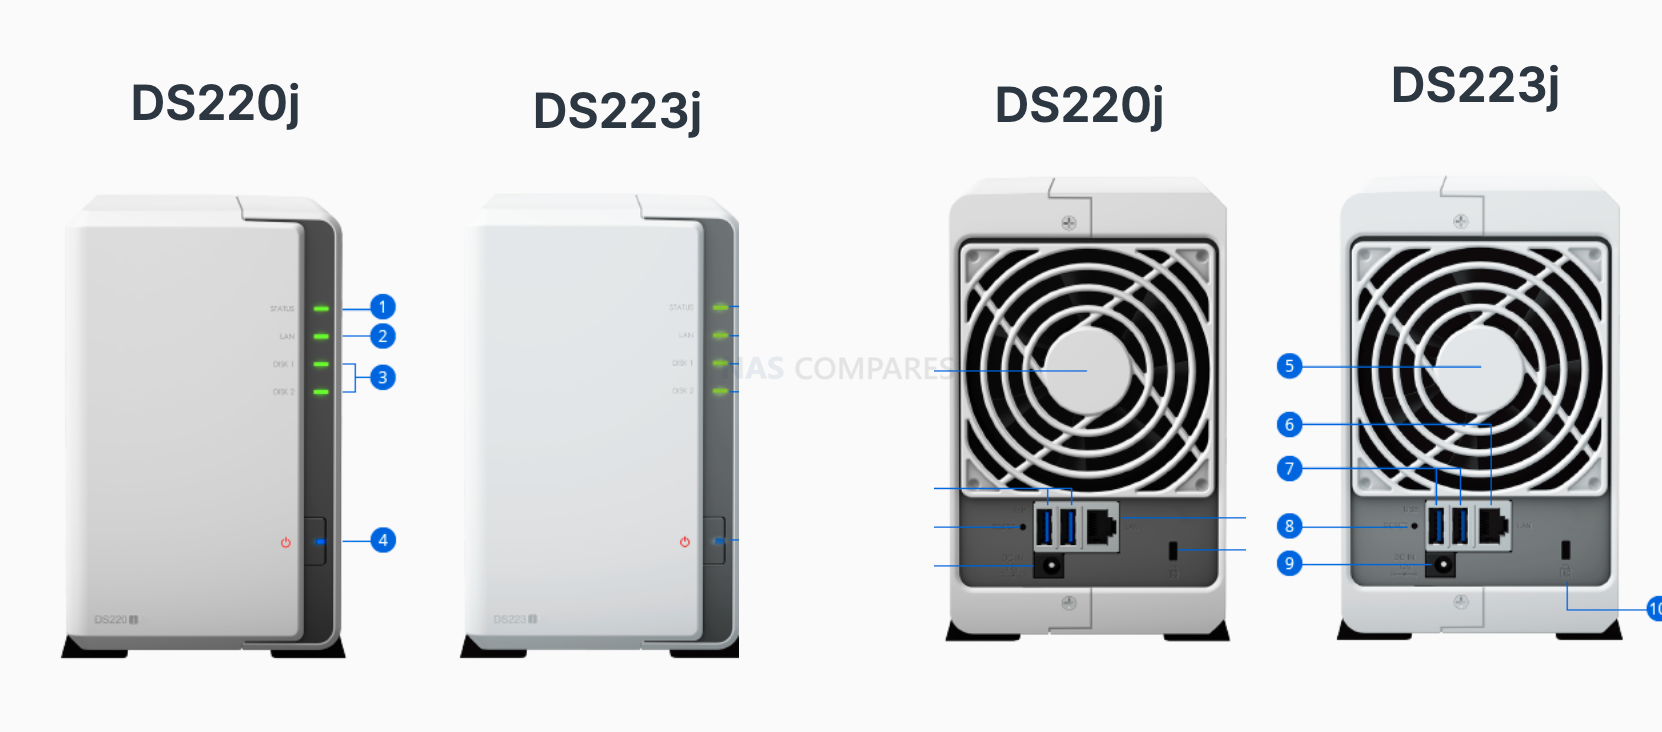 DS223j VS DS220j – NAS Compares